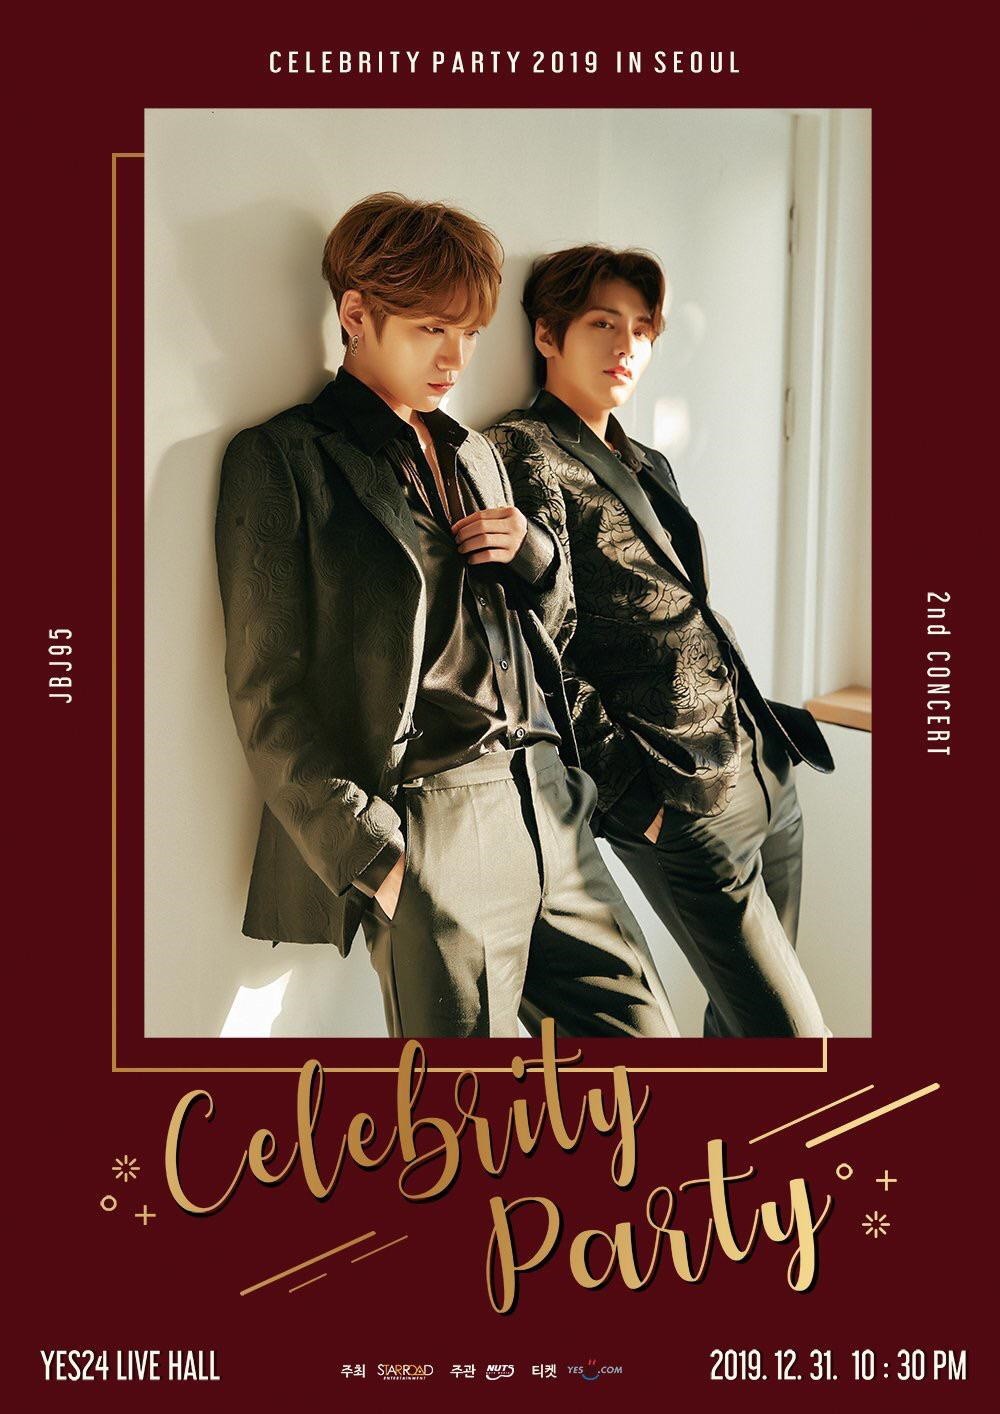 JBJ95 анонсировали дату их предстоящего концерта "Celebrity Party 2019 in Seoul"